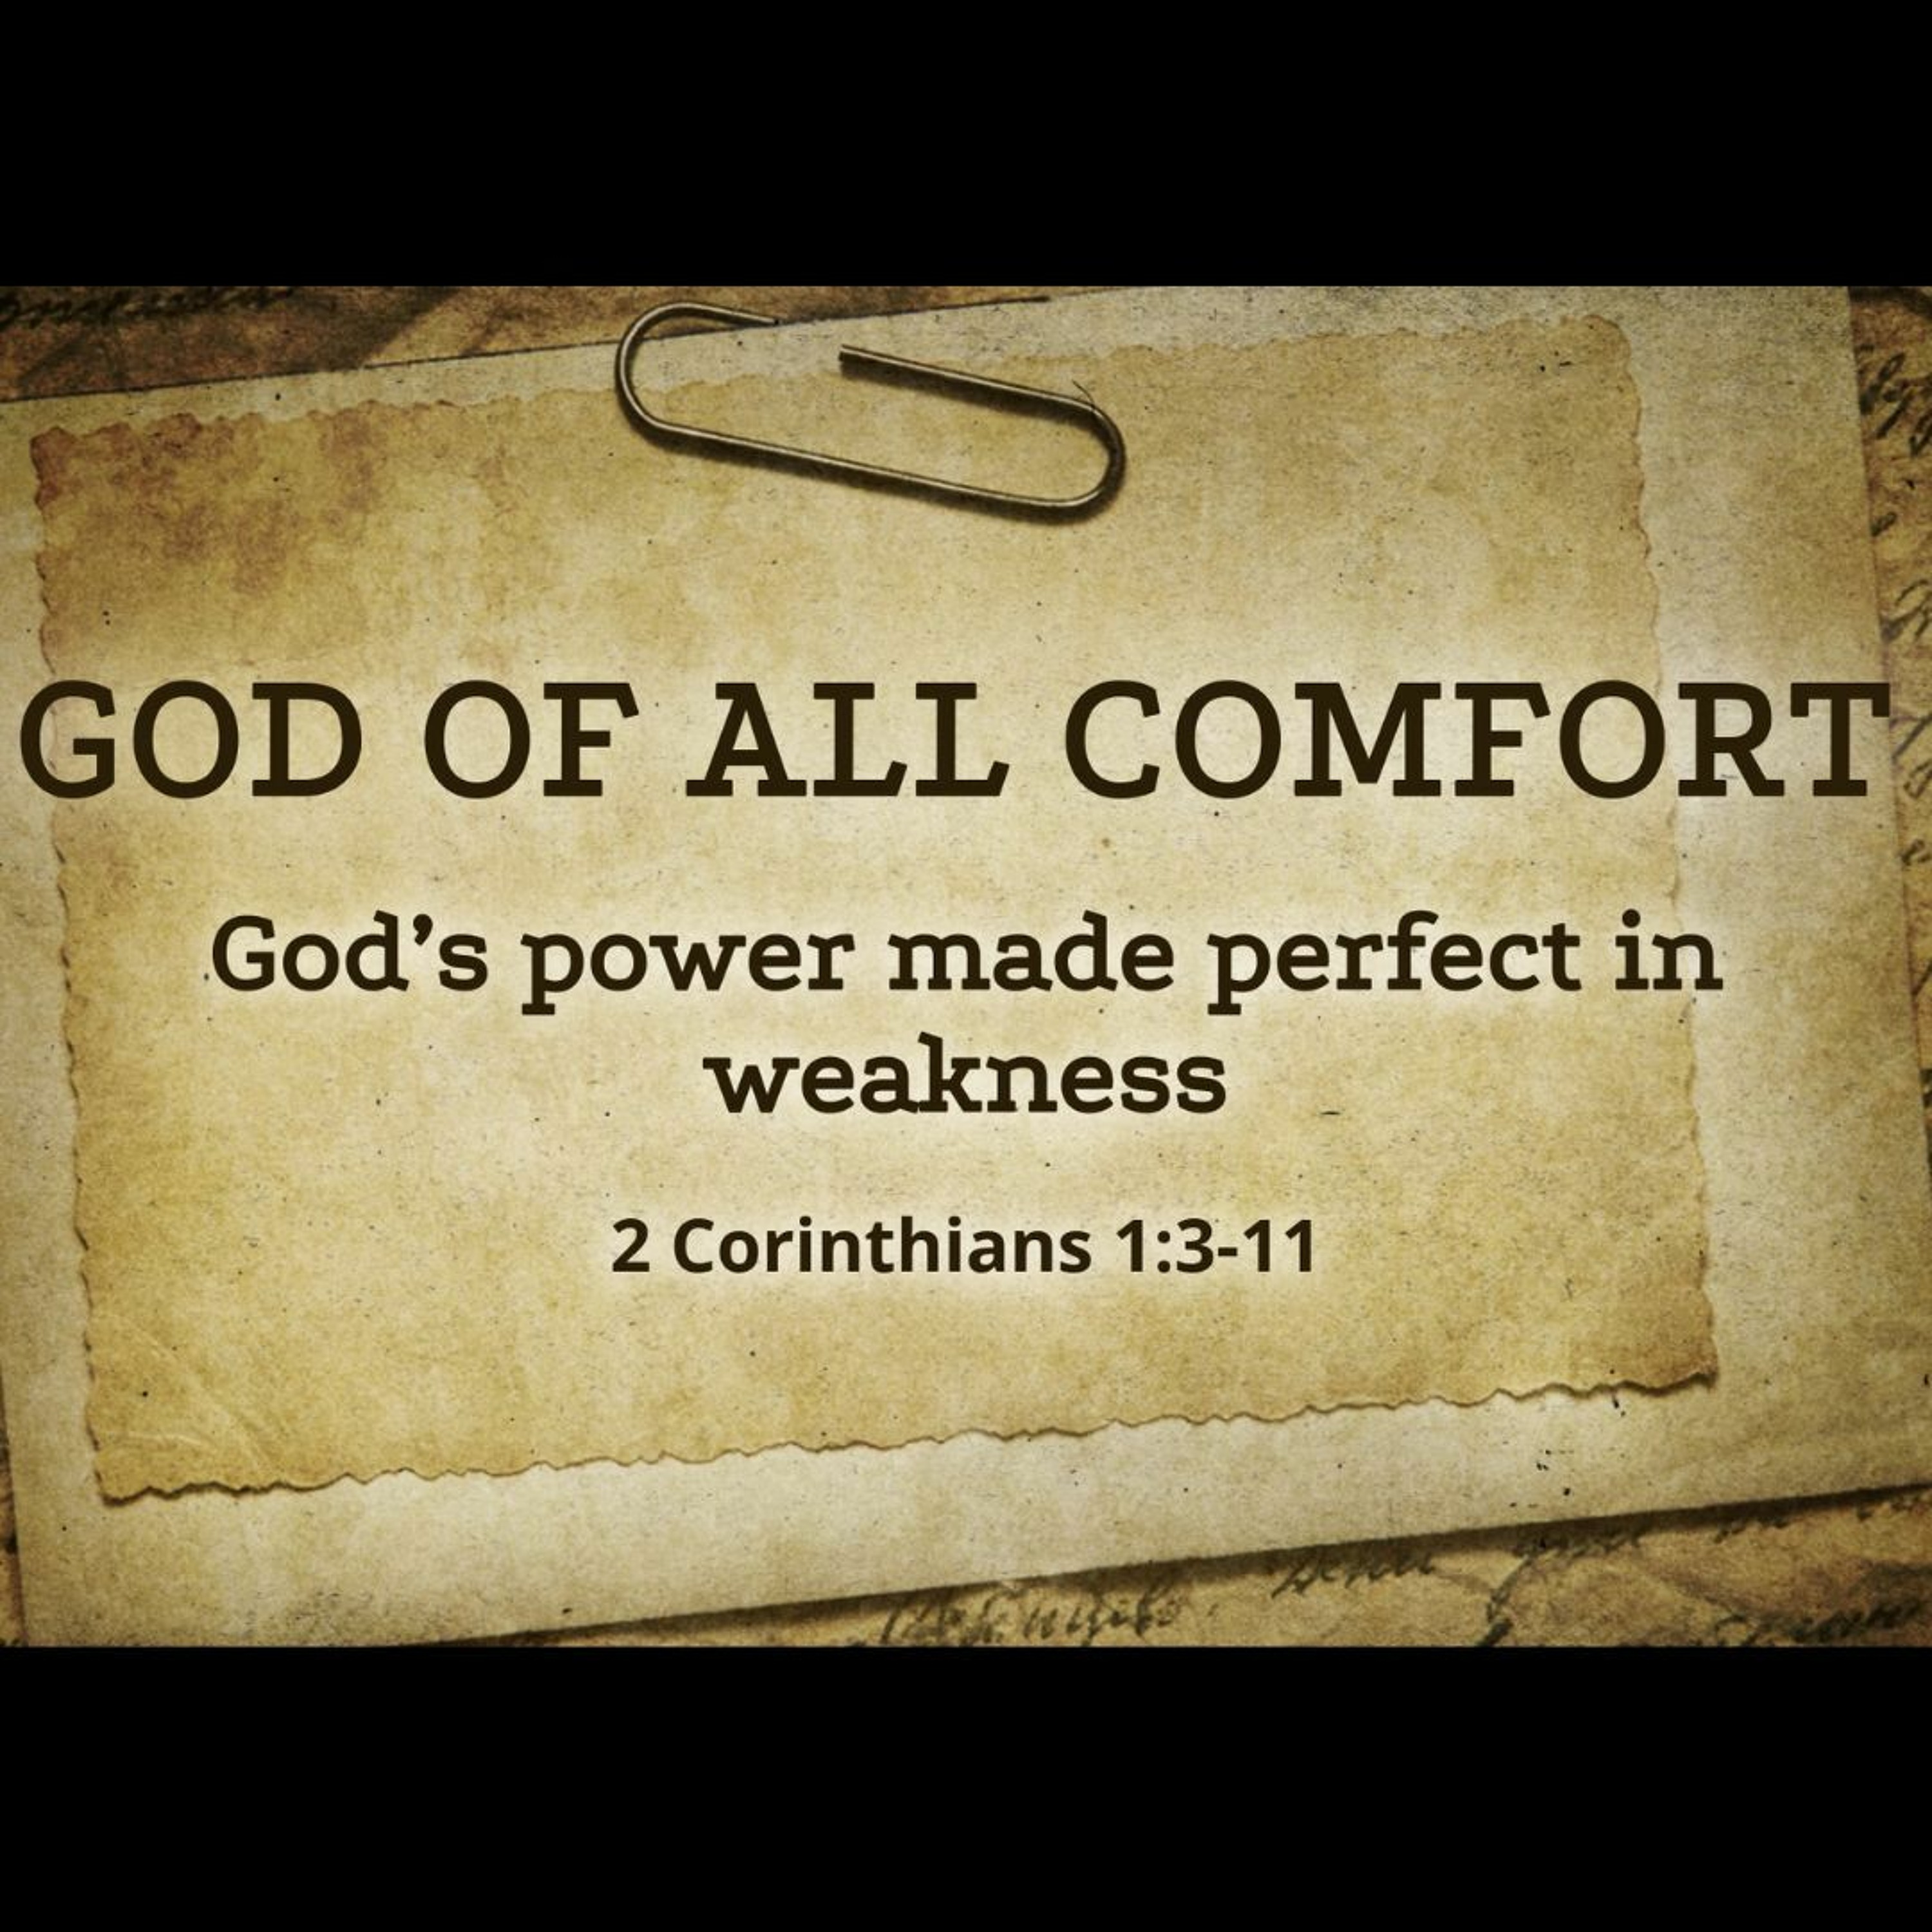 God of All Comfort (2 Corinthians 1:3-11)